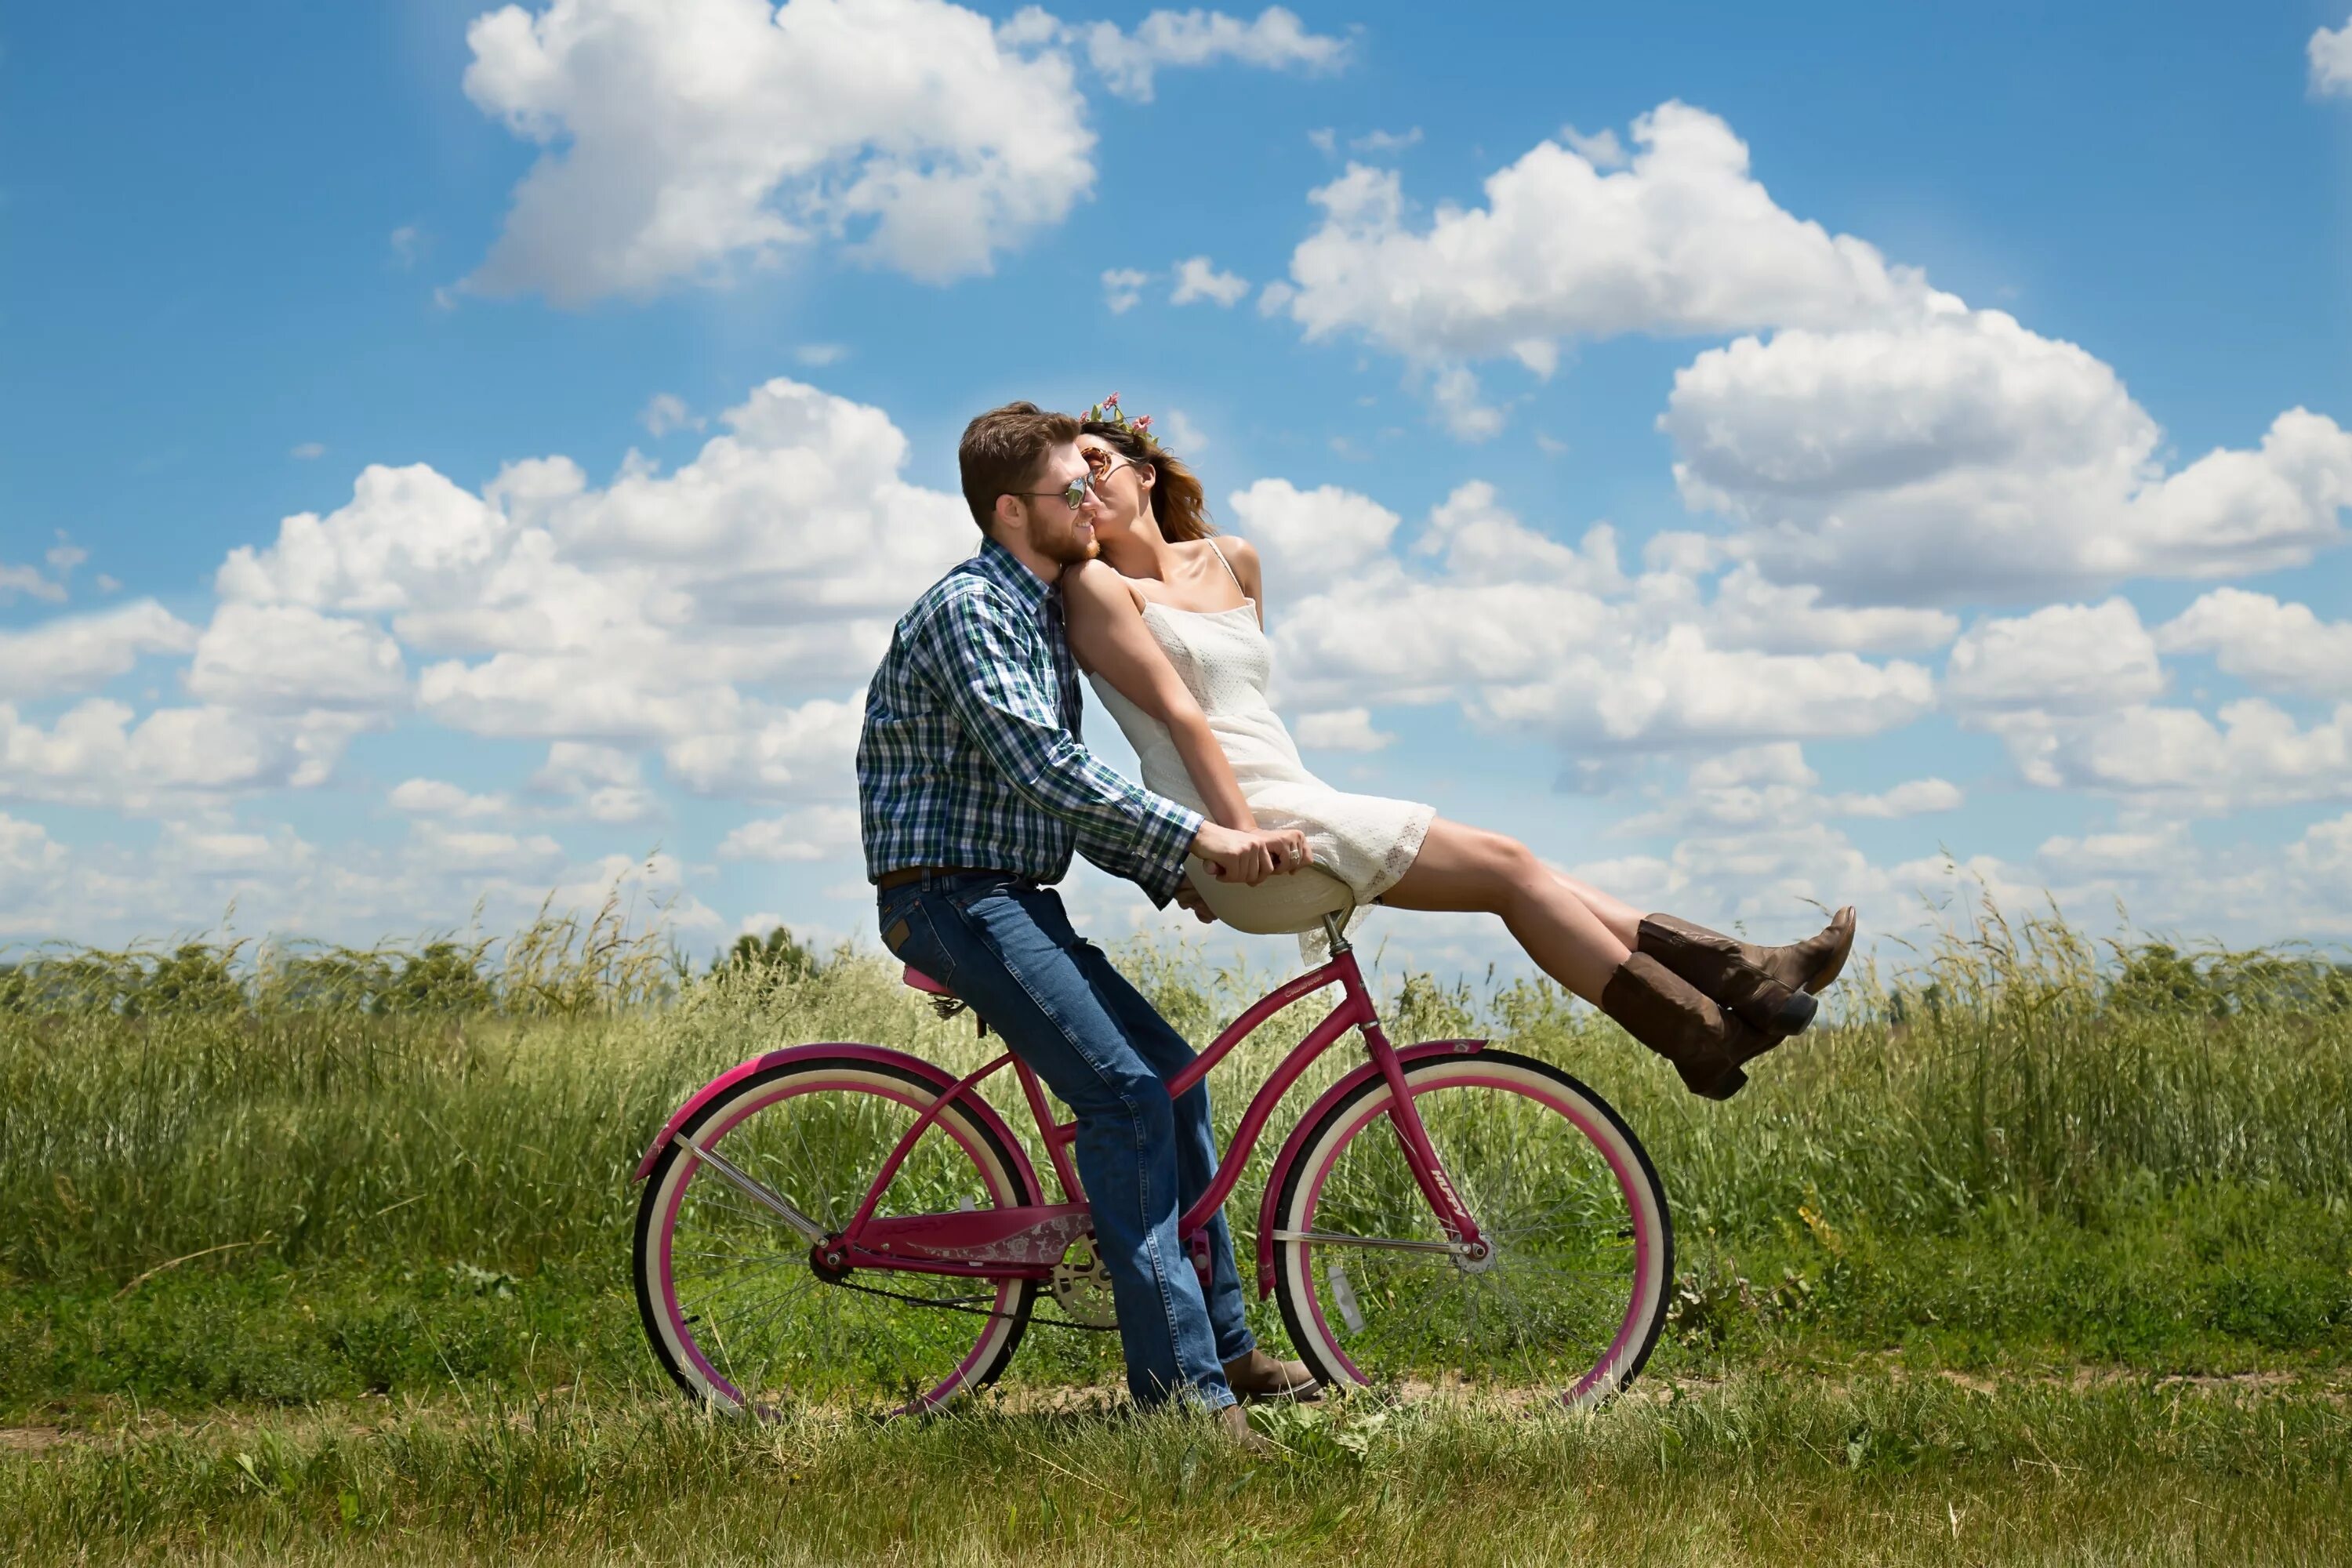 Девчонке повезло. Девушка на велосипеде. Человек на велосипеде. Мужчина и женщина на велосипеде. Влюбленные на велосипеде.